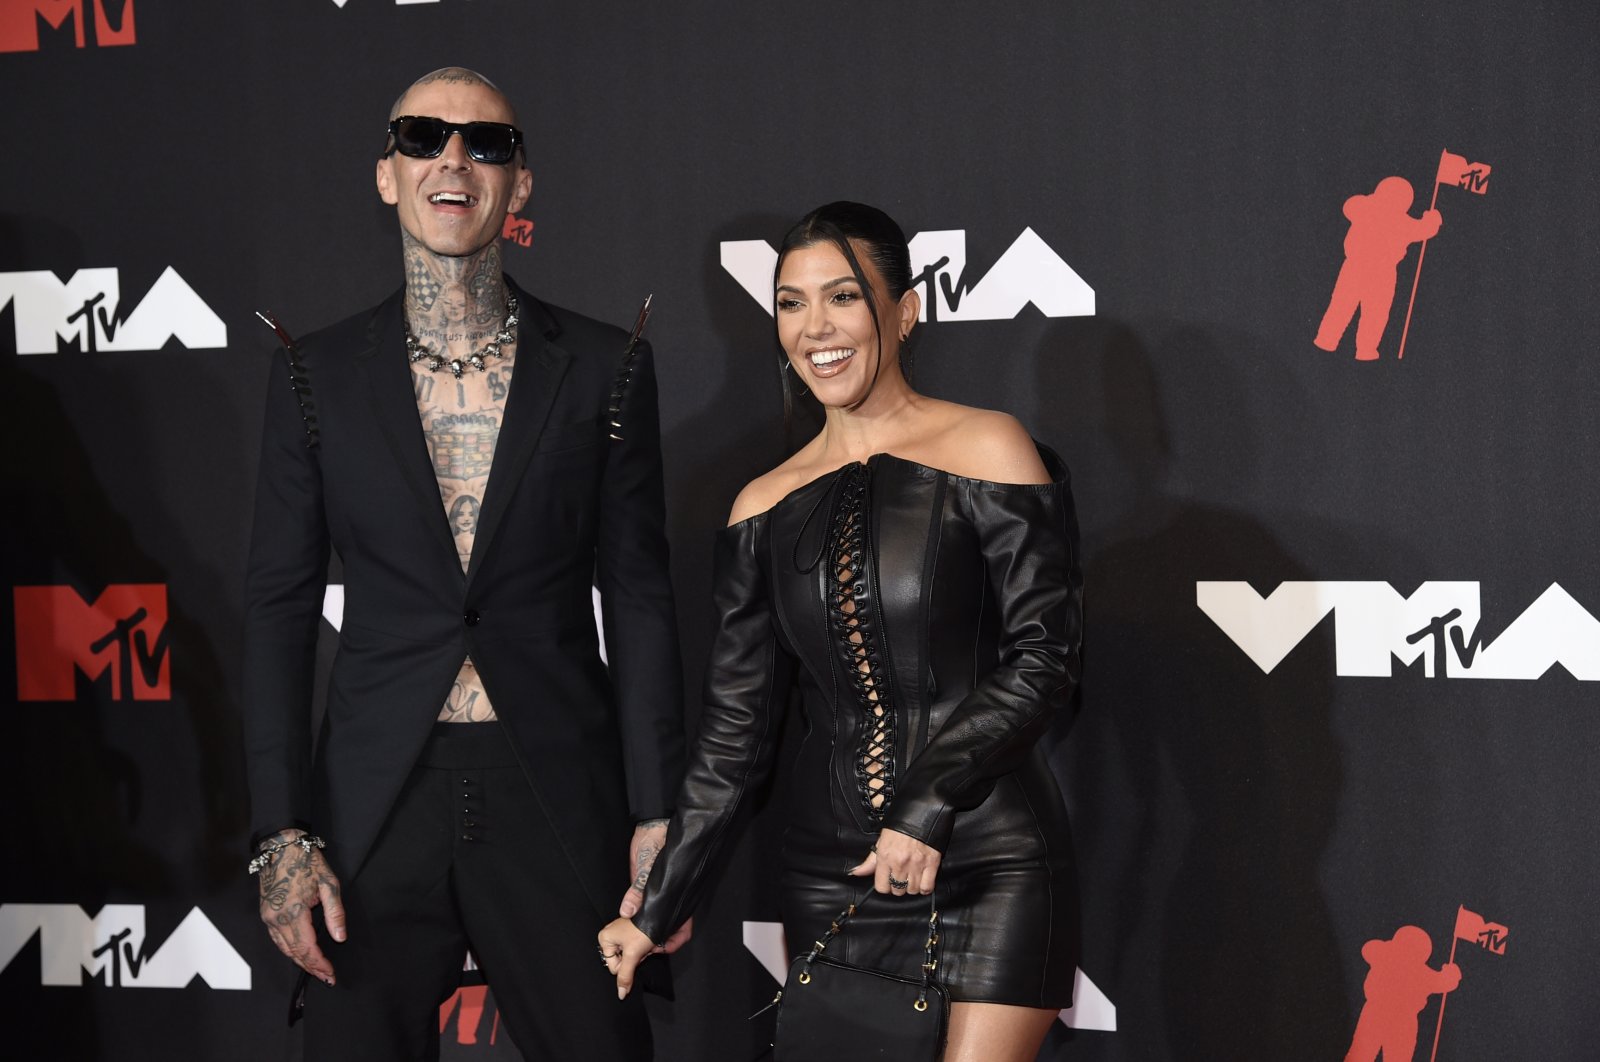 Travis Barker (L) and Kourtney Kardashian arrive at the MTV Video Music Awards at Barclays Center, New York, U.S., Sept. 12, 2021. (AP Photo)